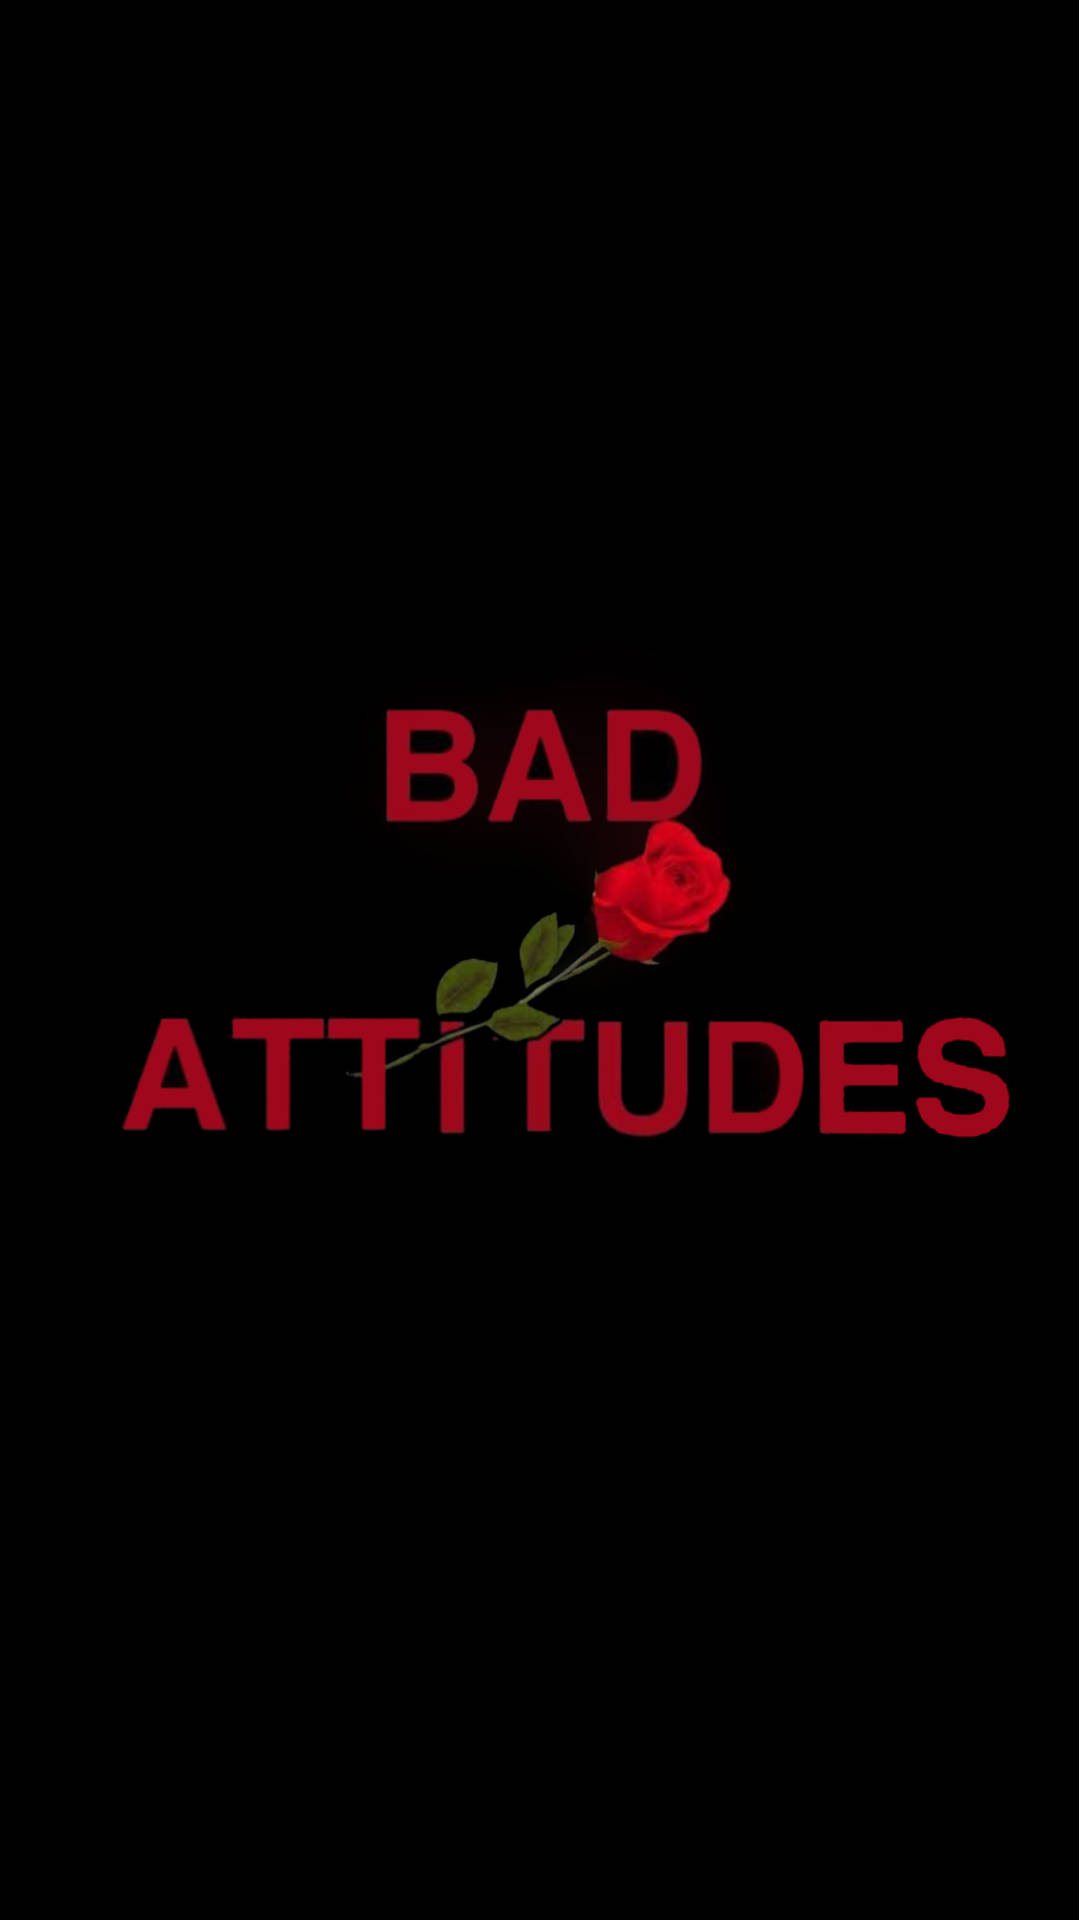 Red Baddie Bad Attitudes